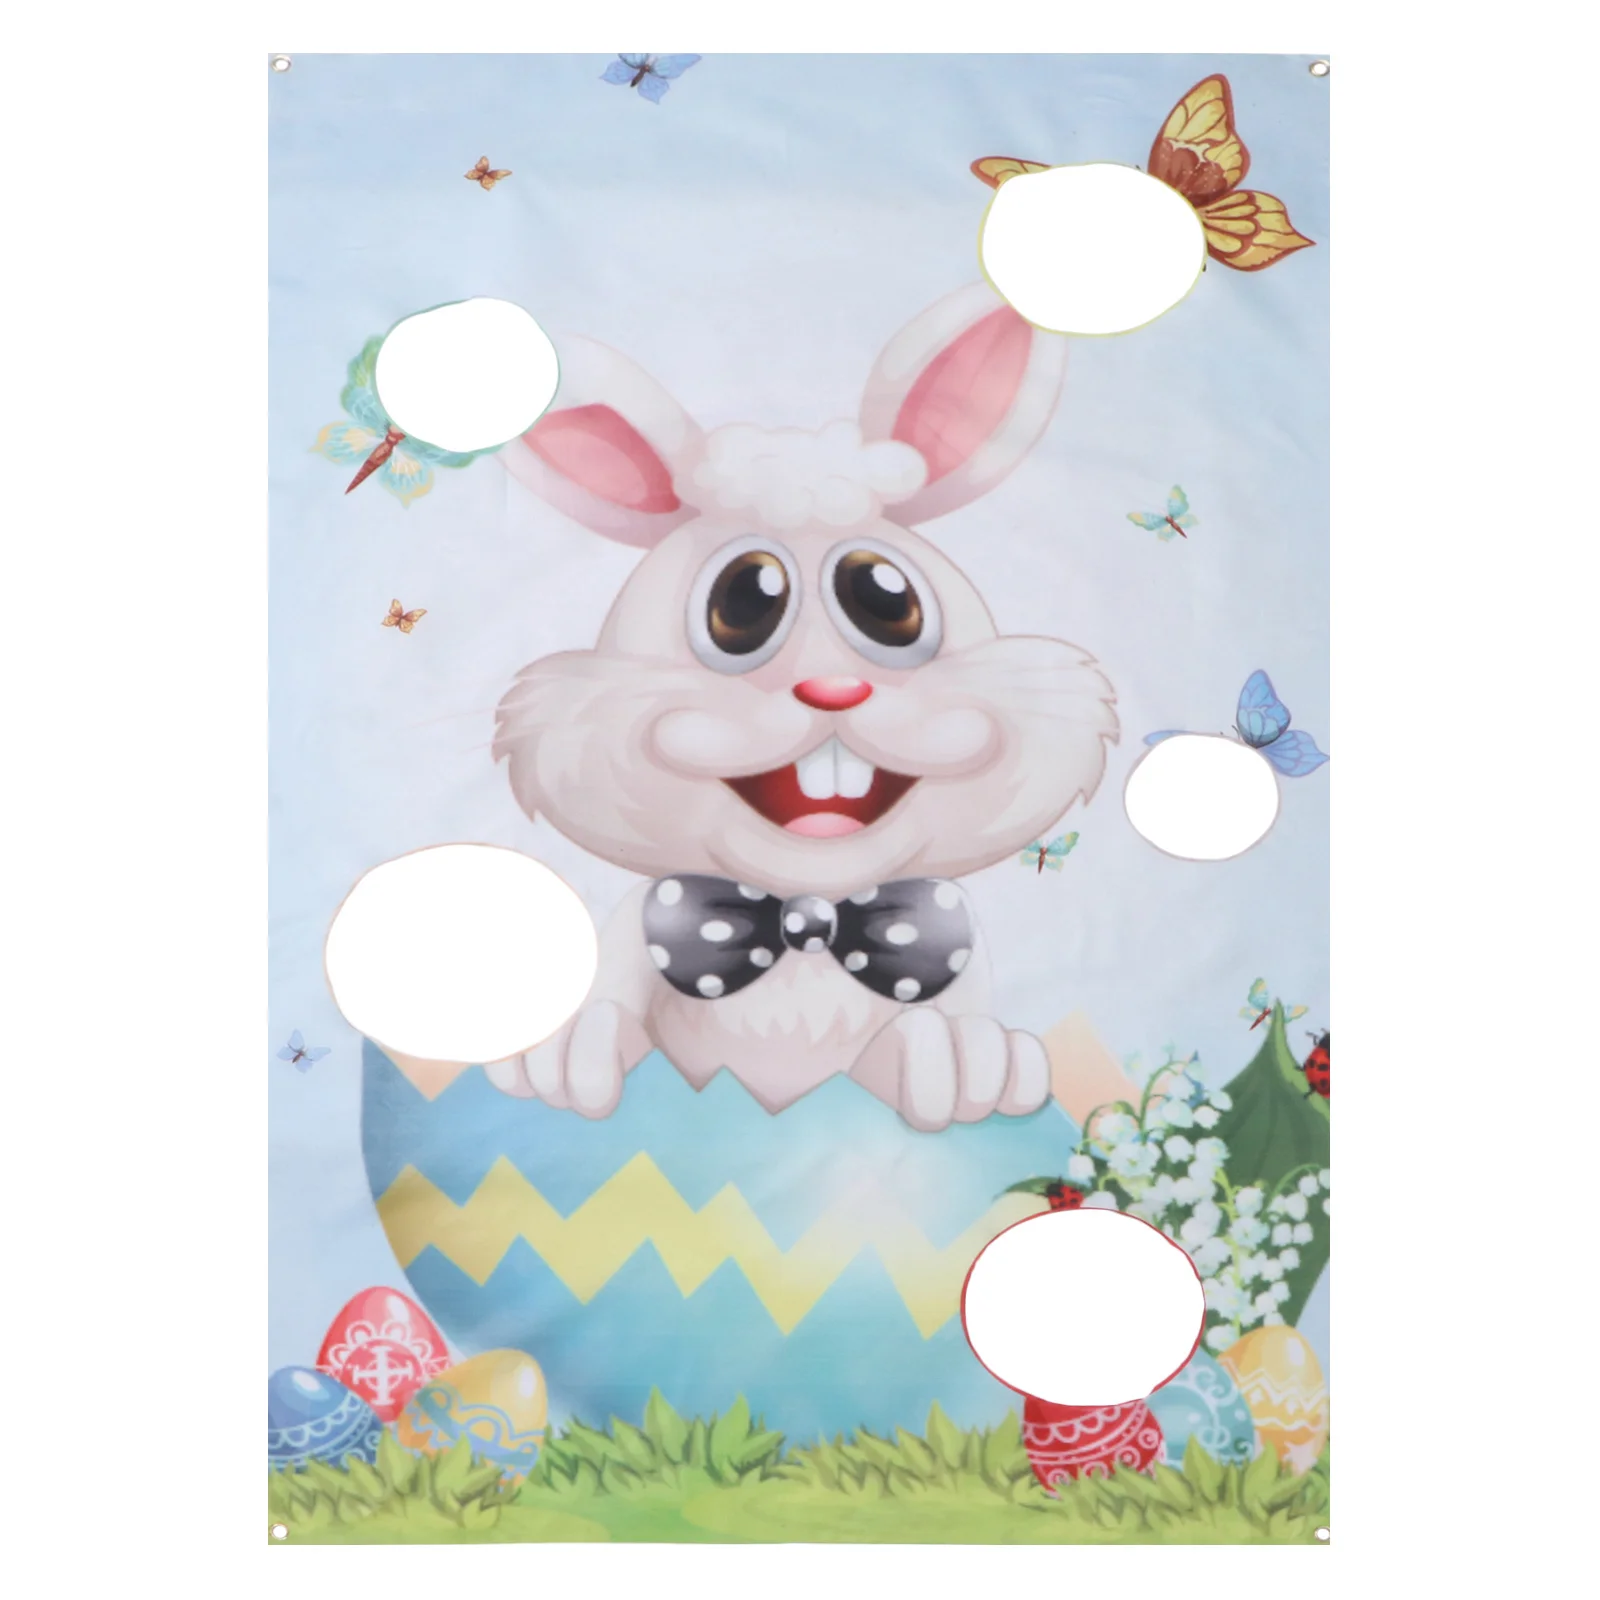 

Kidcraft Playset Easter Beanbag Flag Kid Toy Eggs 140X80X0.05cm Yard Game Supplies Rabbit Toss Cloth Bunny Themed Banner